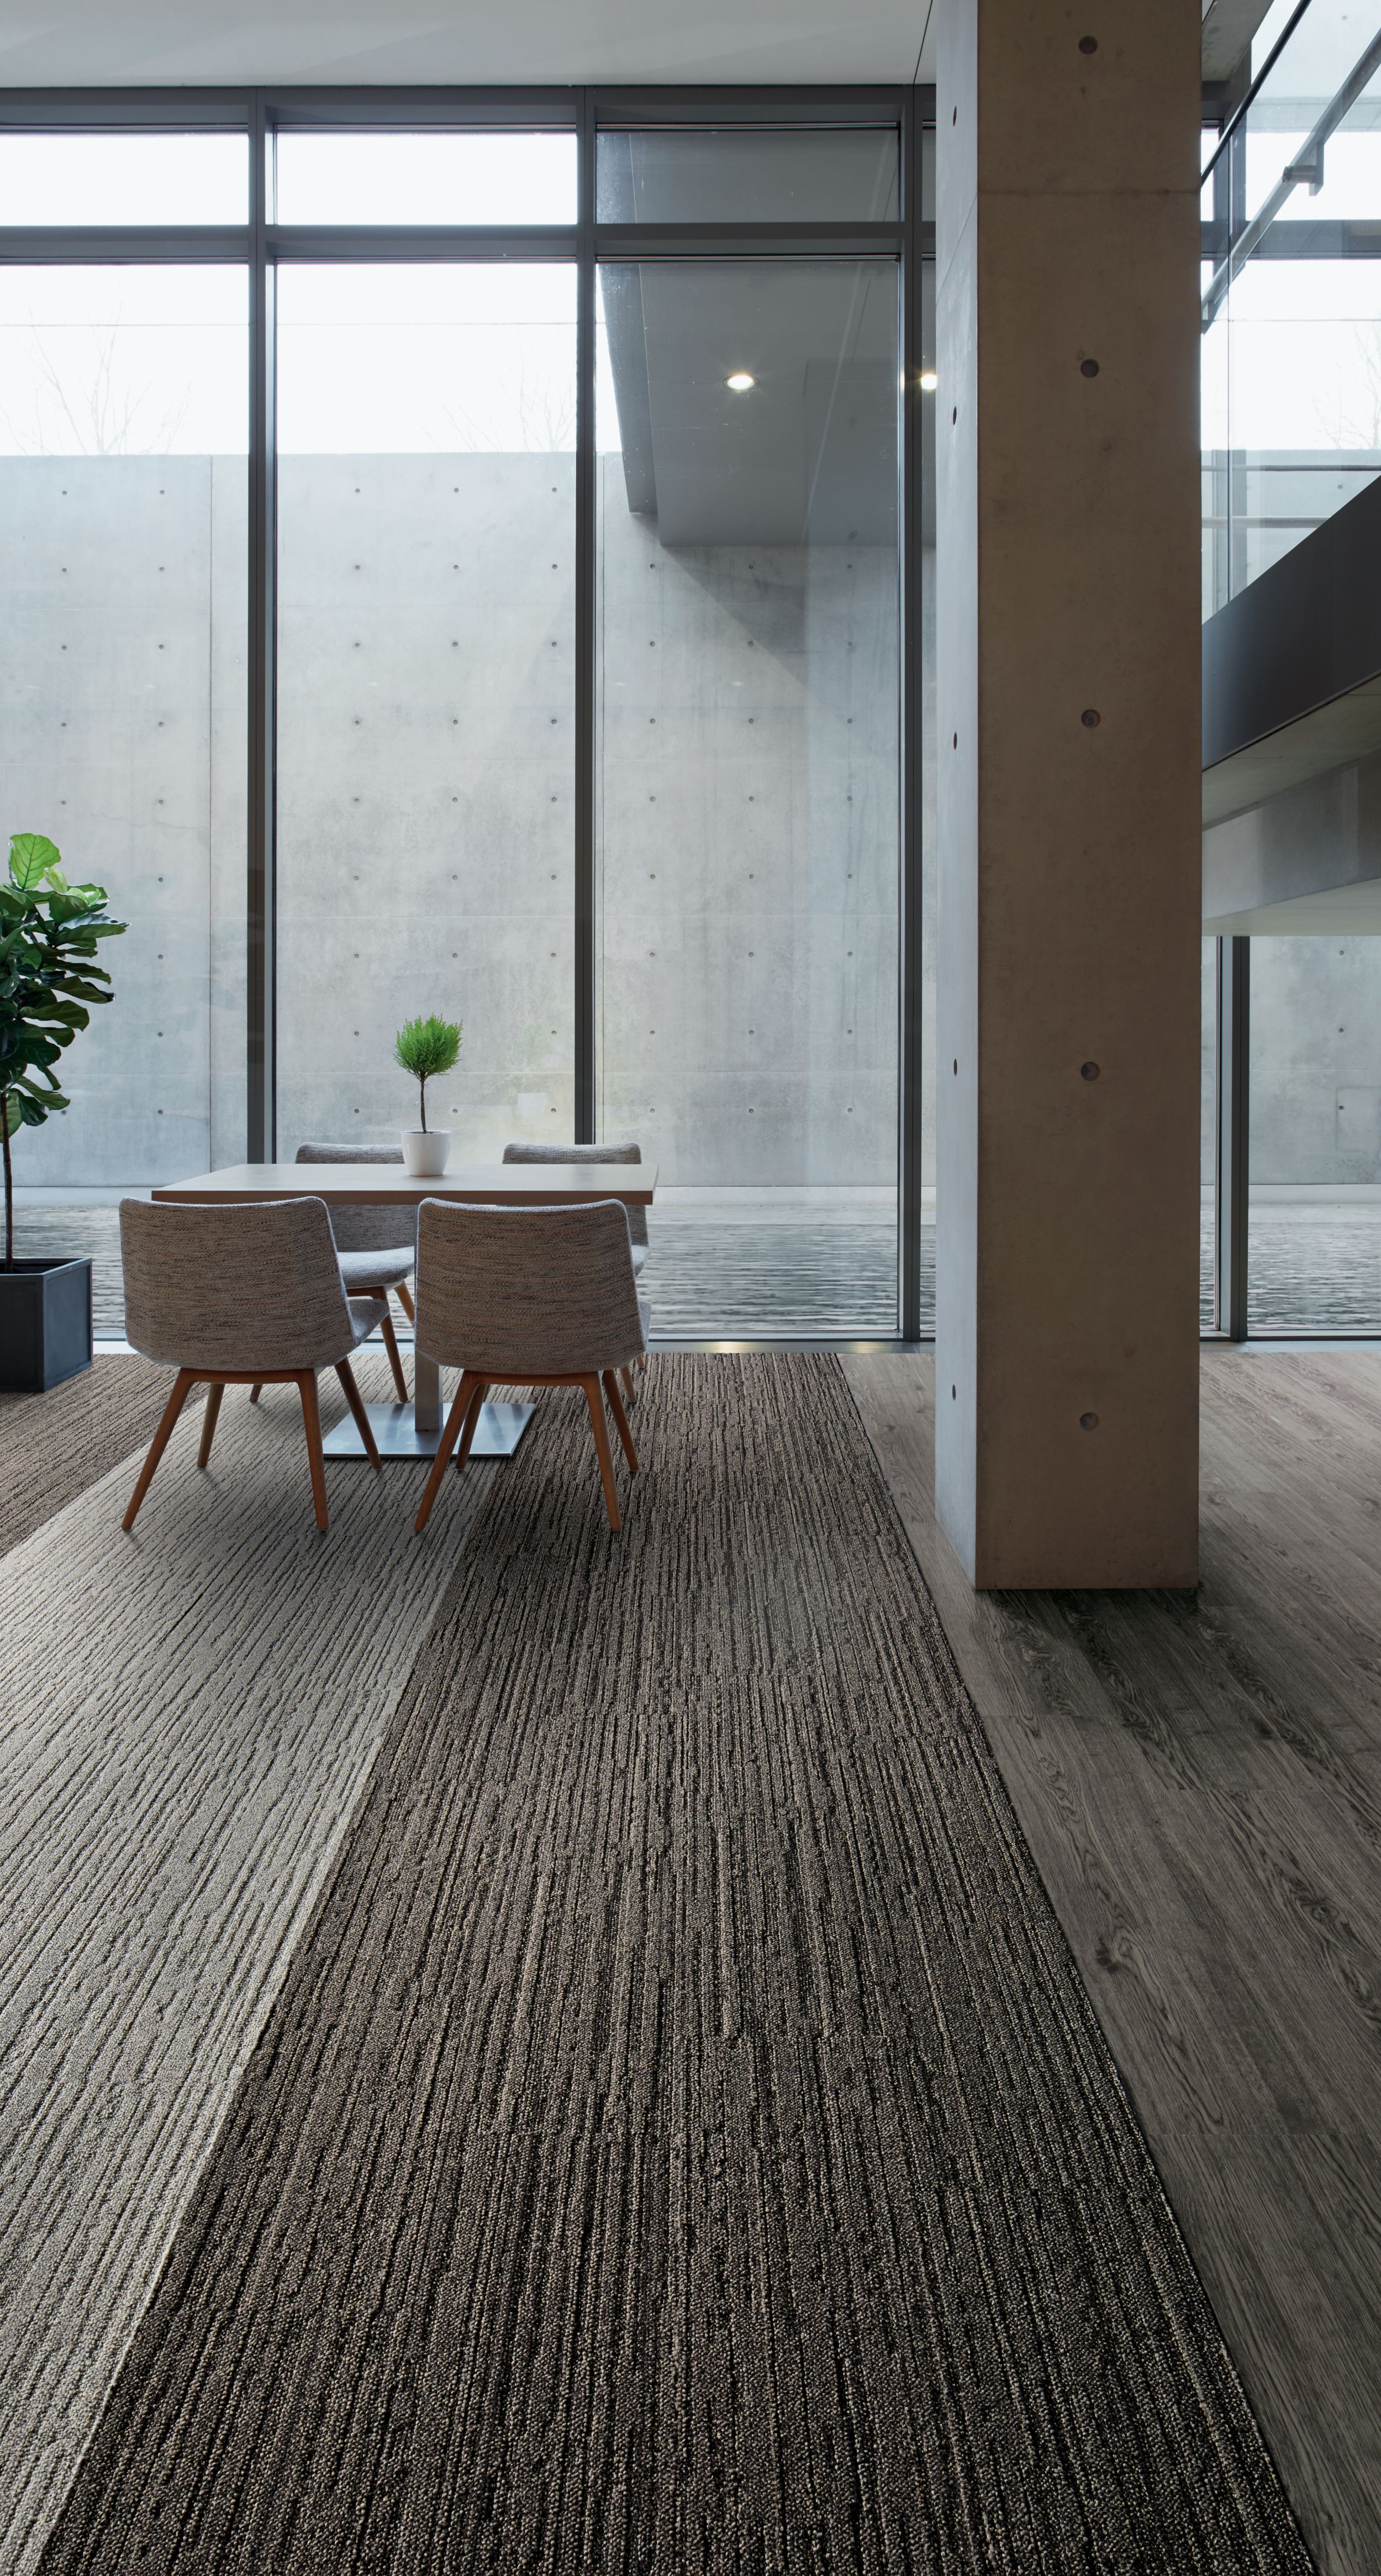 image Interface WW880 plank carpet tile and Natural Woodgrains LVT in office common area numéro 6